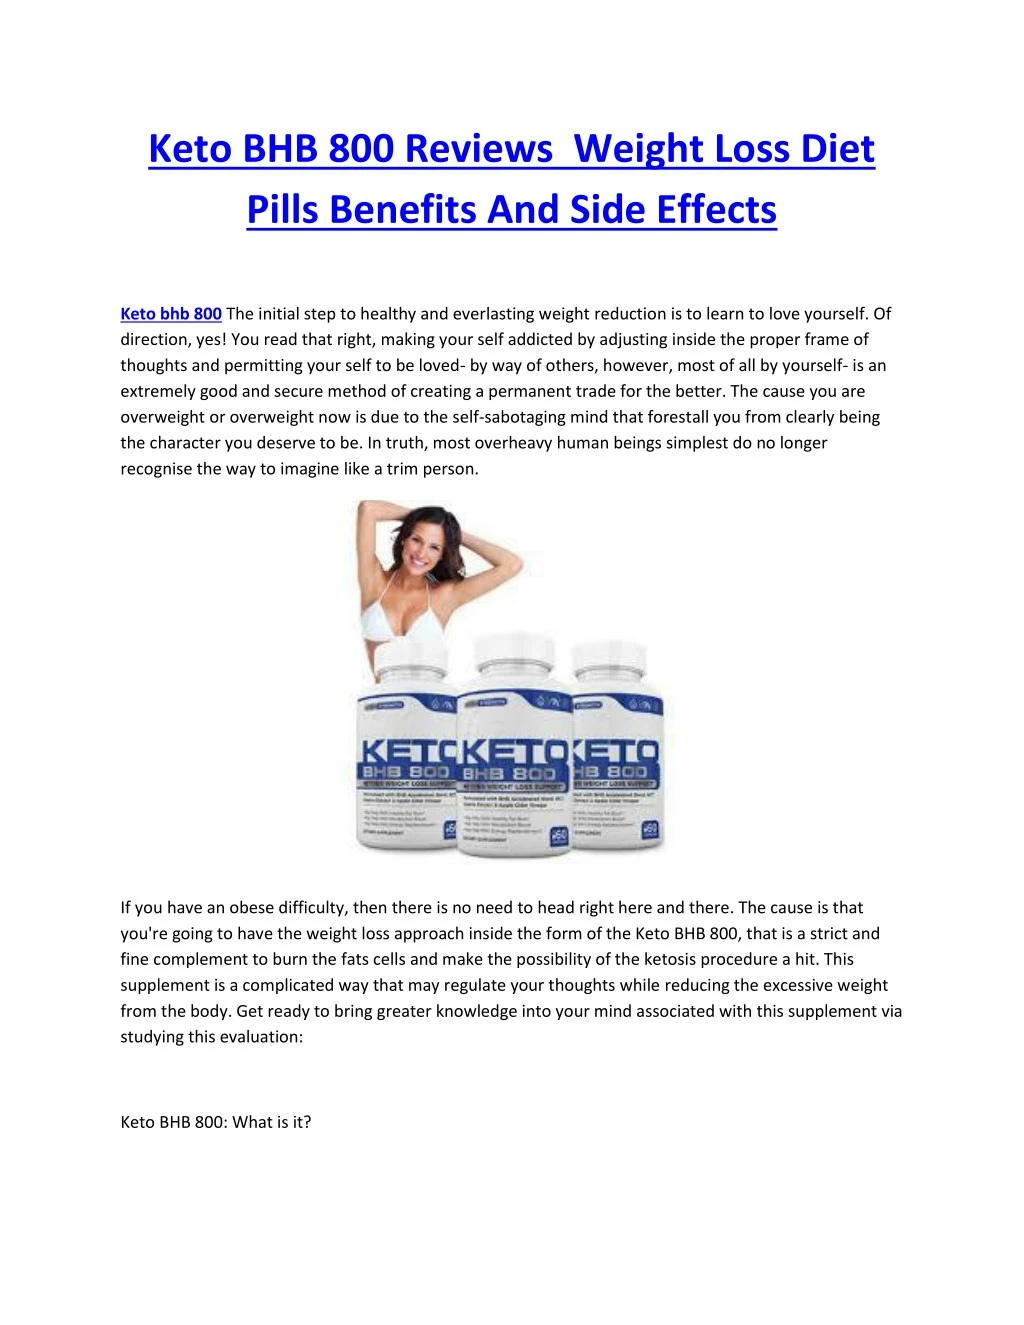 keto bhb 800 reviews weight loss diet pills